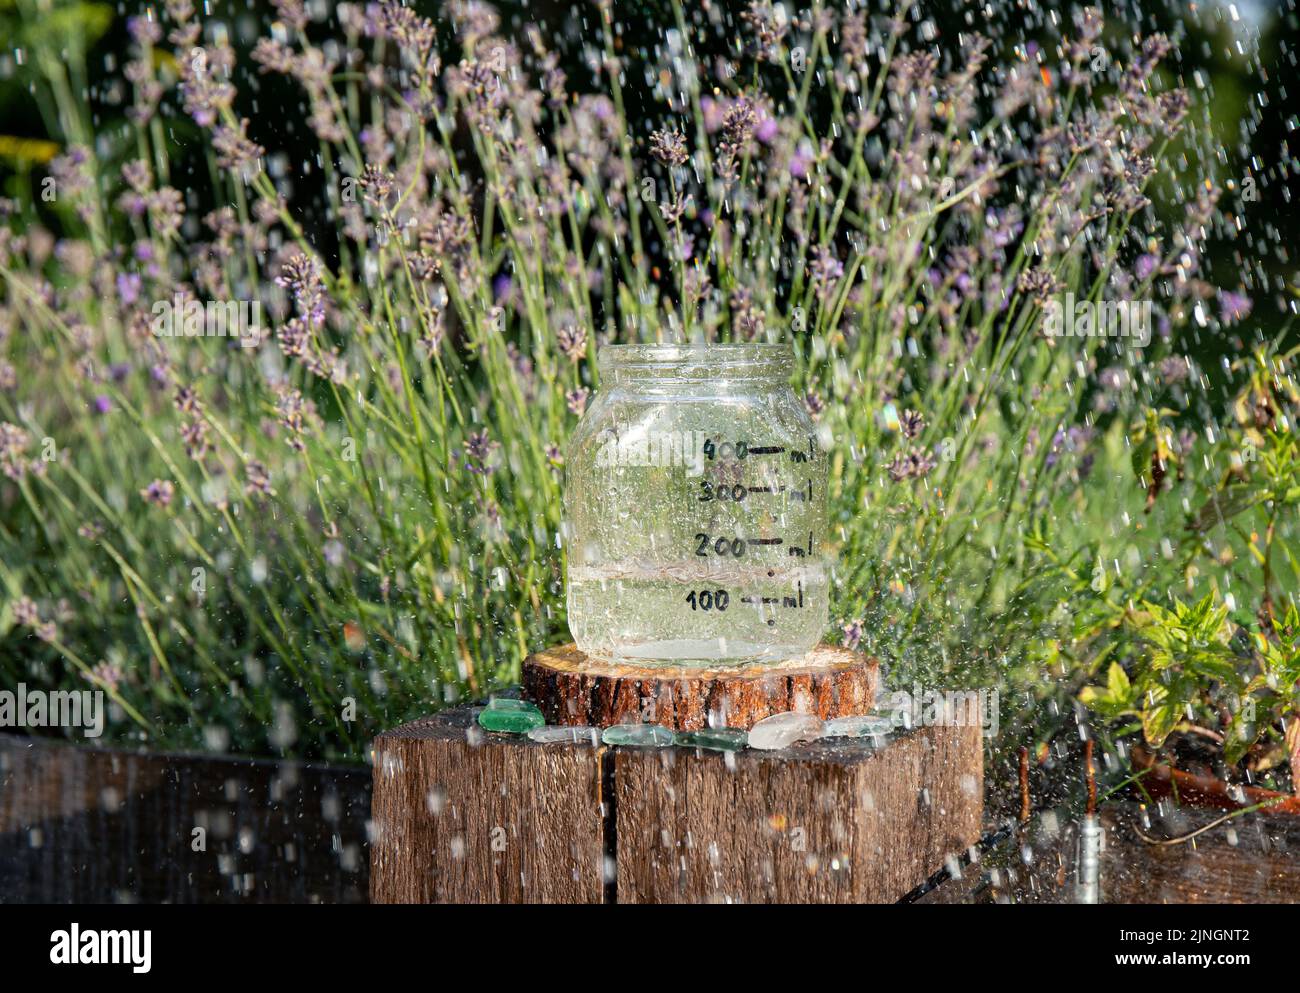 Handmade rain water gauge made of glass jar, measuring rain in home garden. Raining outdoors in garden. Also known as udometer, pluvia metior. Stock Photo